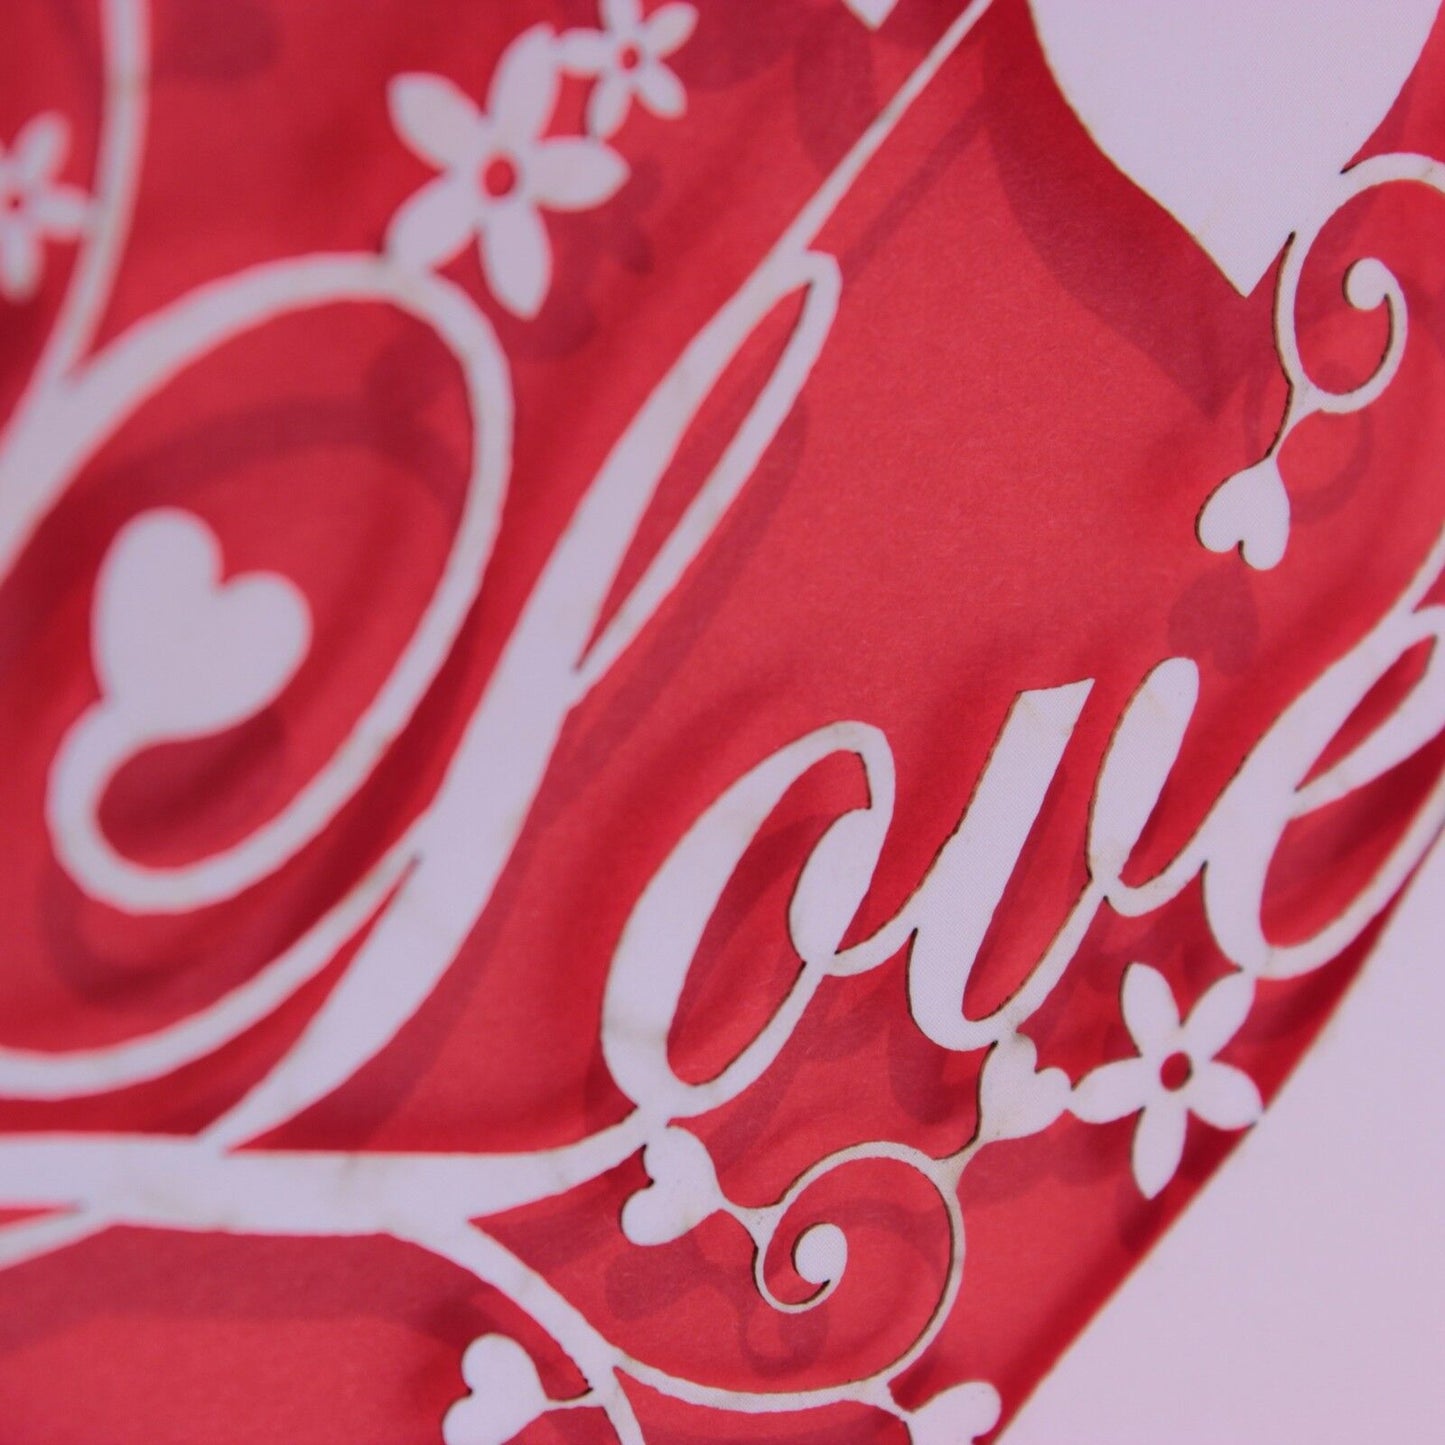 Laser Cut Card With Elegant Love and Heart Design - Wedding / Valentine's